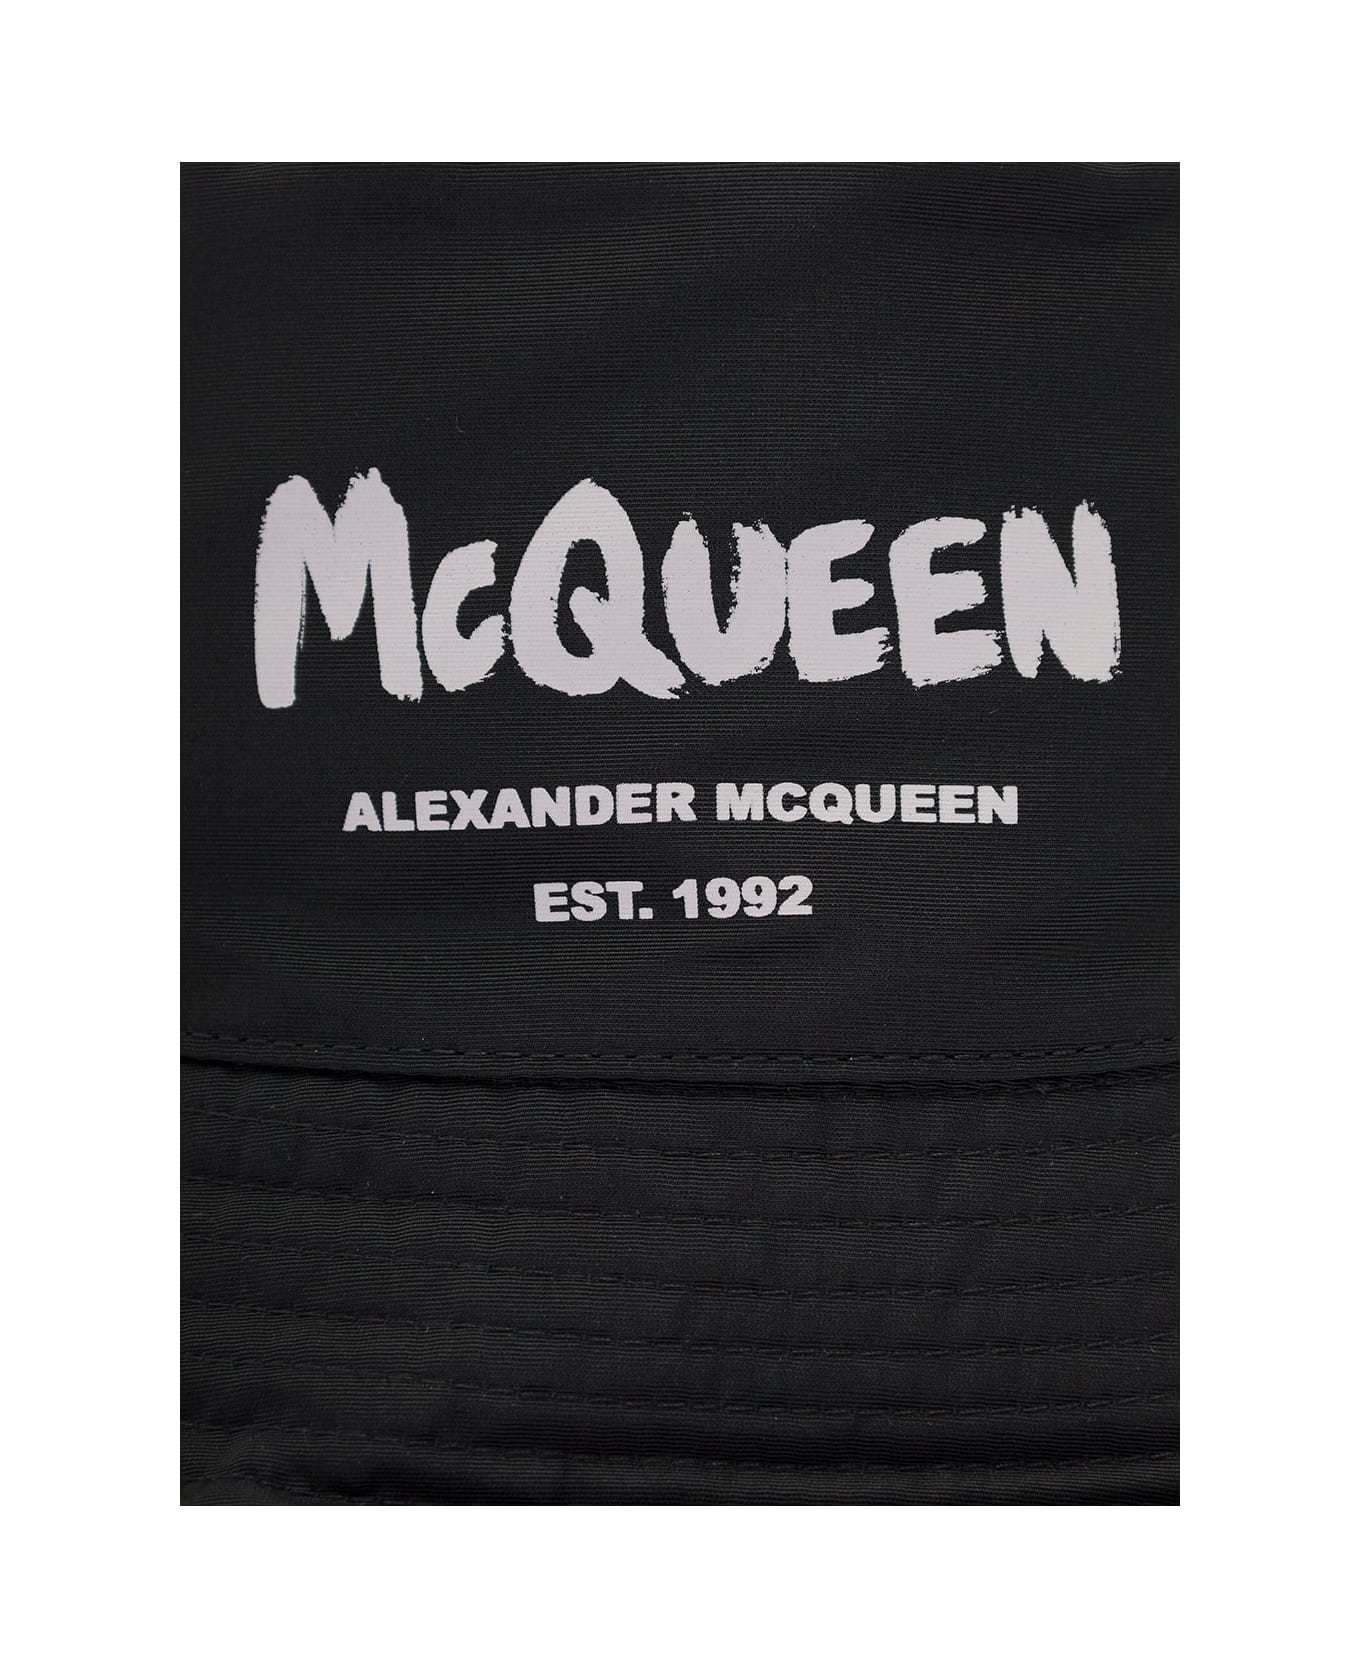 Alexander McQueen Black Bucket Hat With Tonal Graffiti Logo In Polyester - Black